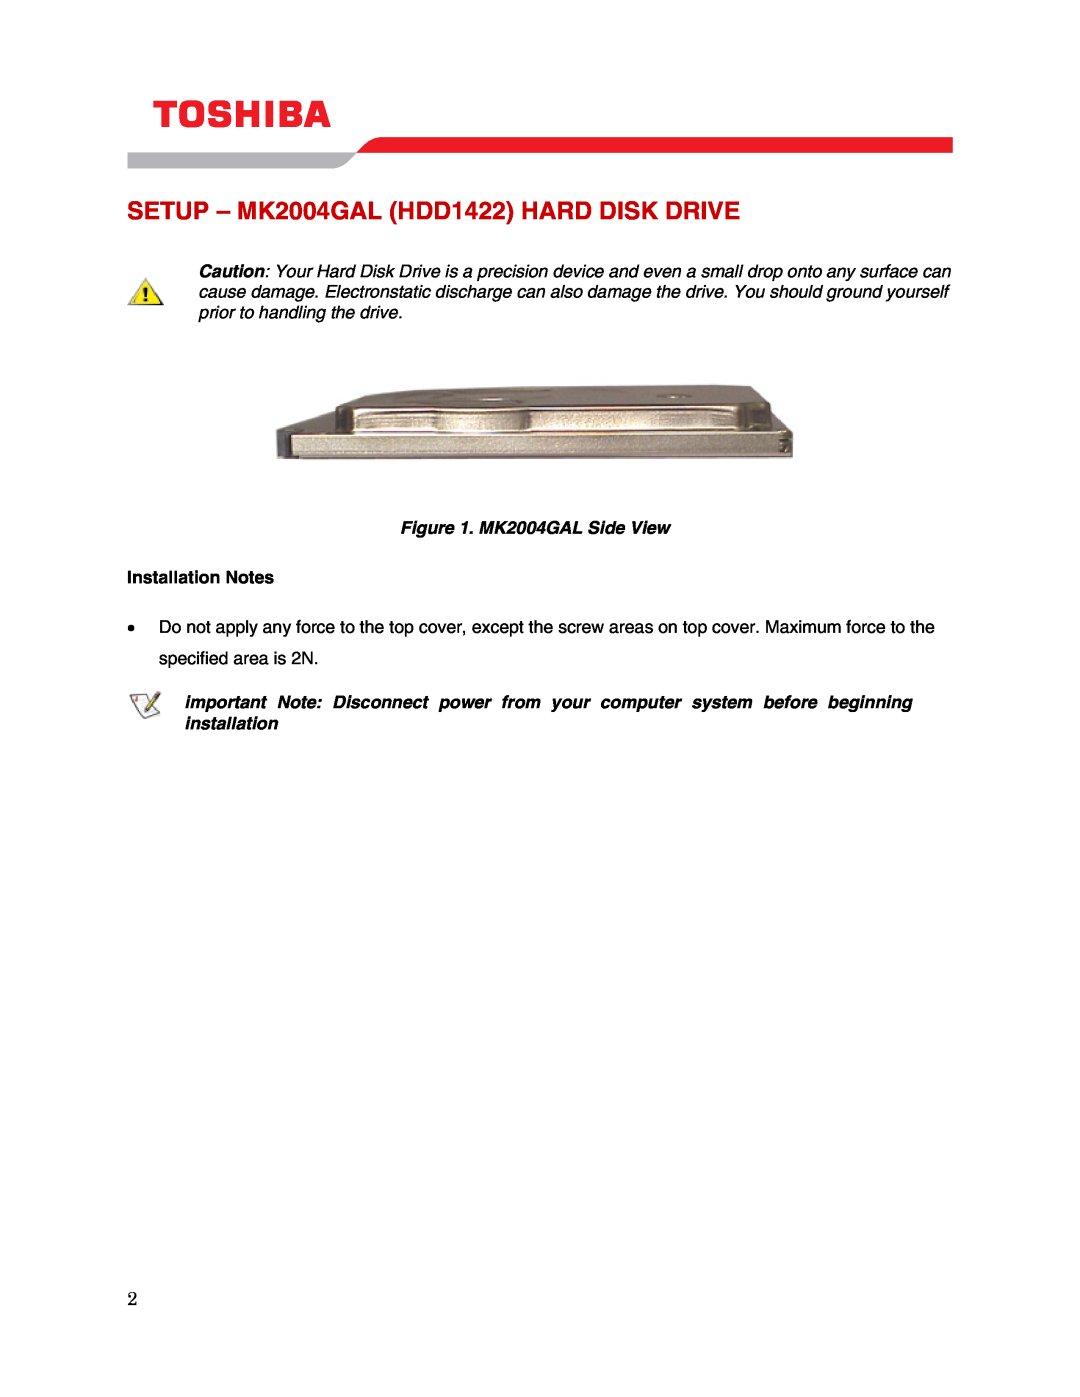 Toshiba user manual SETUP - MK2004GAL HDD1422 HARD DISK DRIVE, MK2004GAL Side View, Installation Notes 